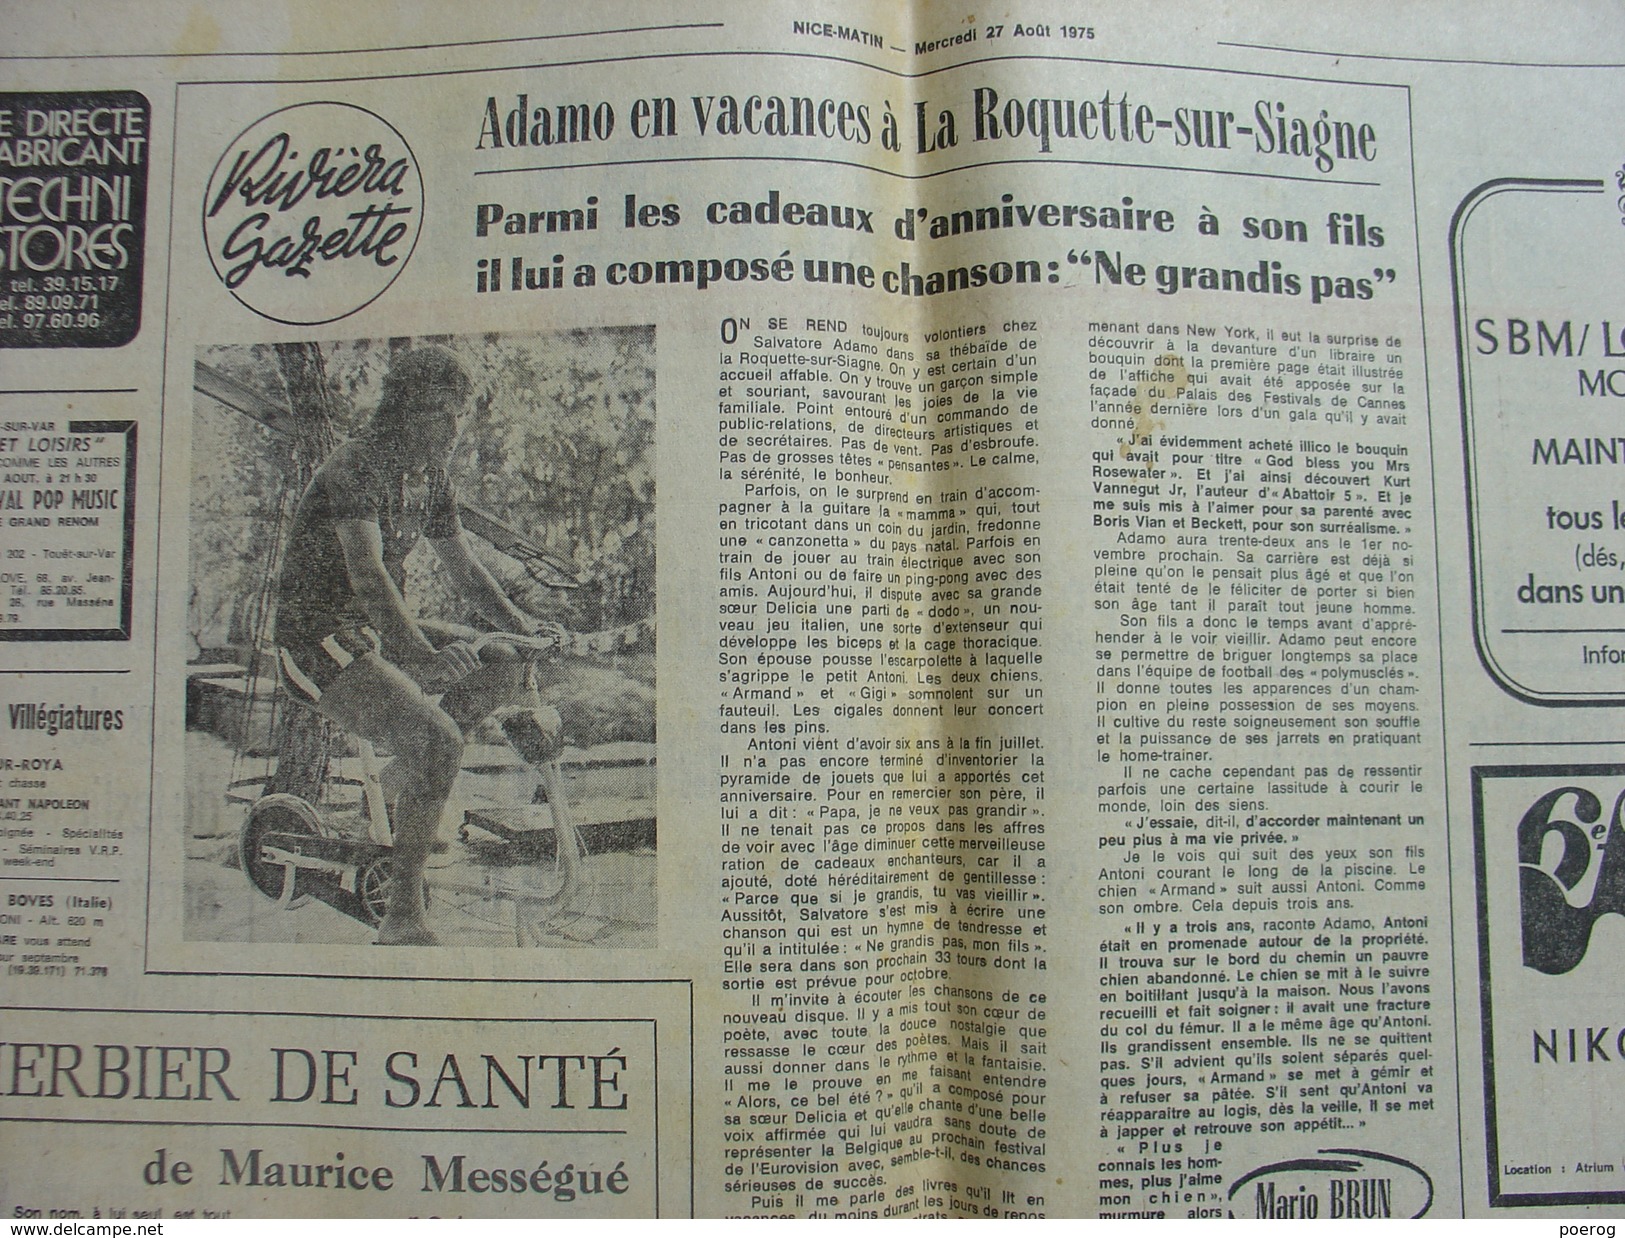 NICE MATIN Du 27 AOUT 1975 - COMMANDO ALERIA CORSE - ST MARTIN DU VAR - ADAMO LA ROQUETTE SUR SIAGNE - MONACO FOOTBALL - 1950 - Today